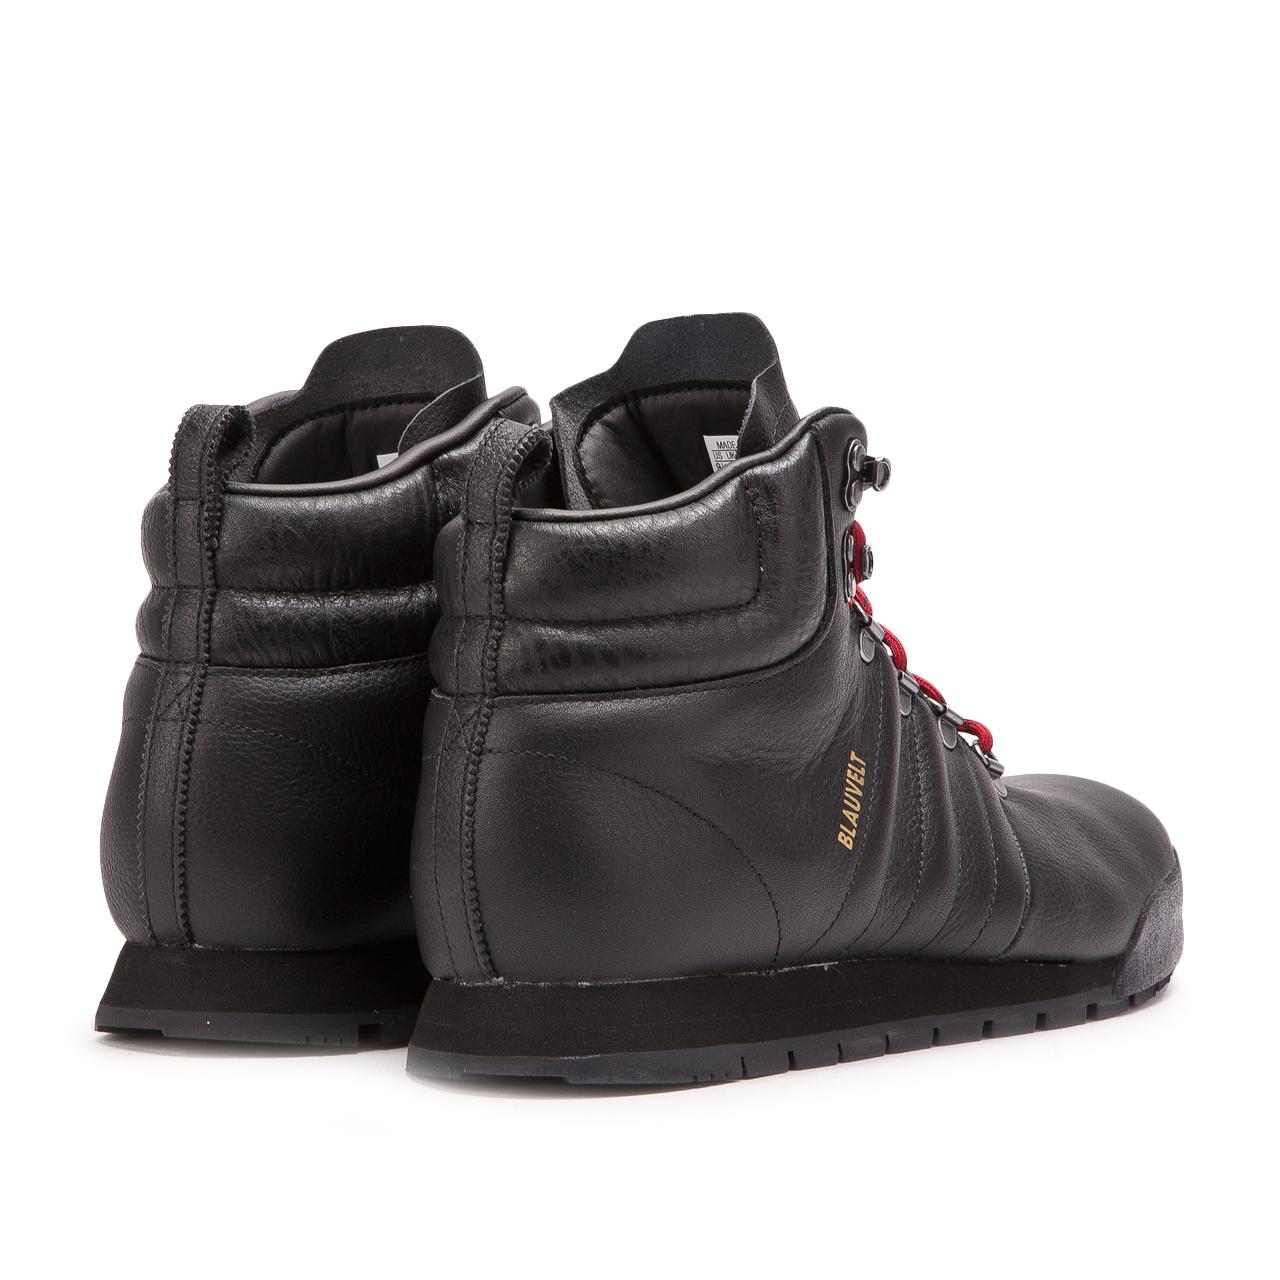 adidas Leather Jake Blauvelt Boot in Black for Men - Lyst